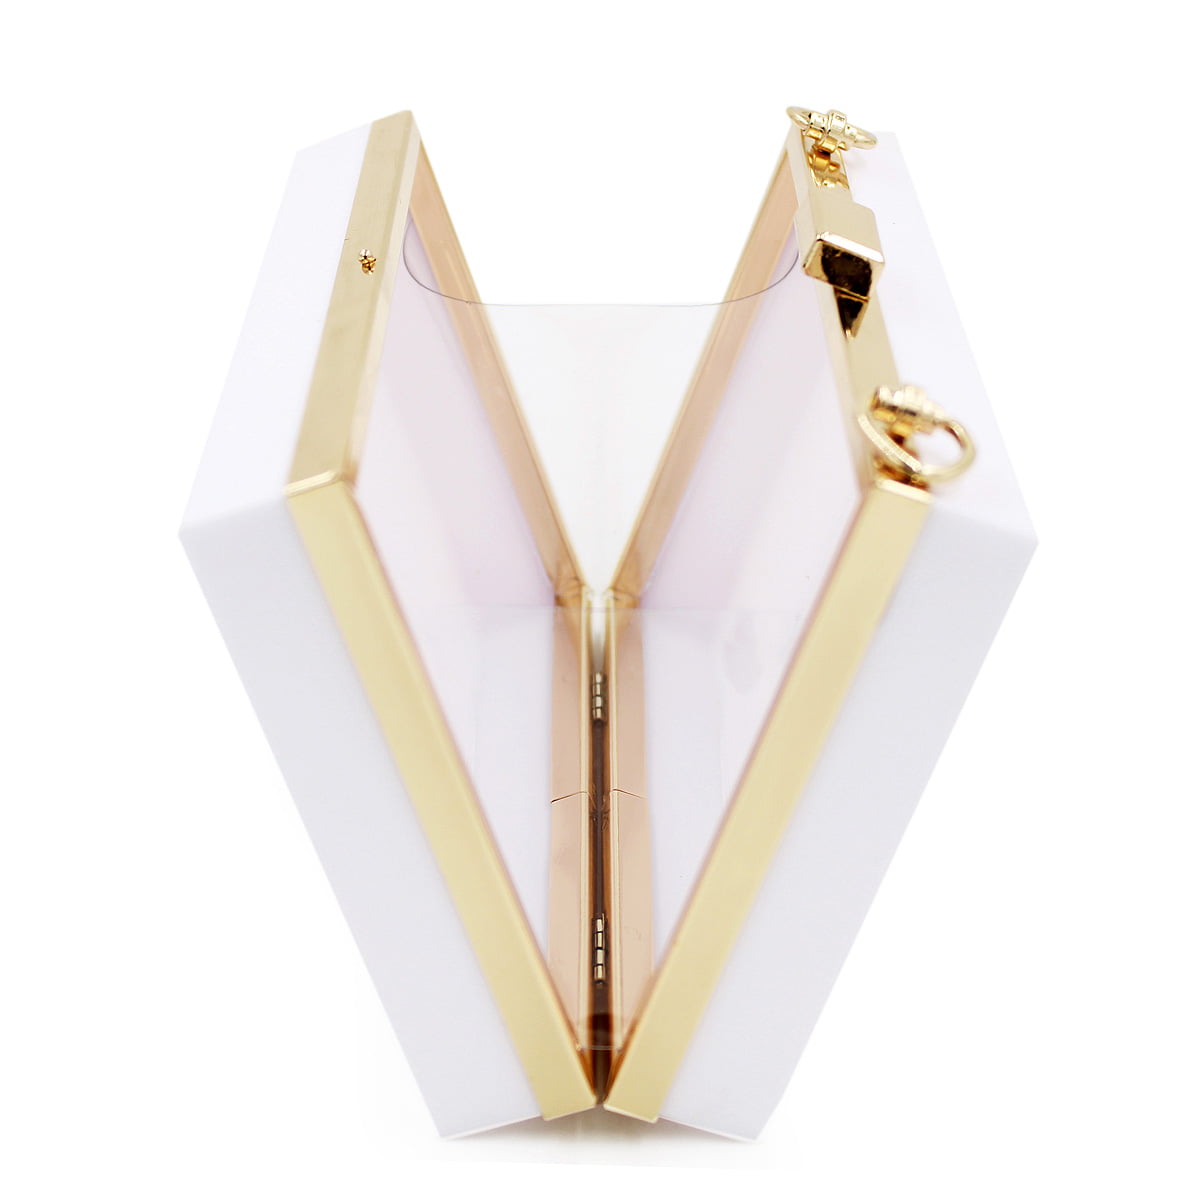 TrendsBlue Women's Premium Transparent Clear Acrylic Hard Box Clutch Bag Handbag